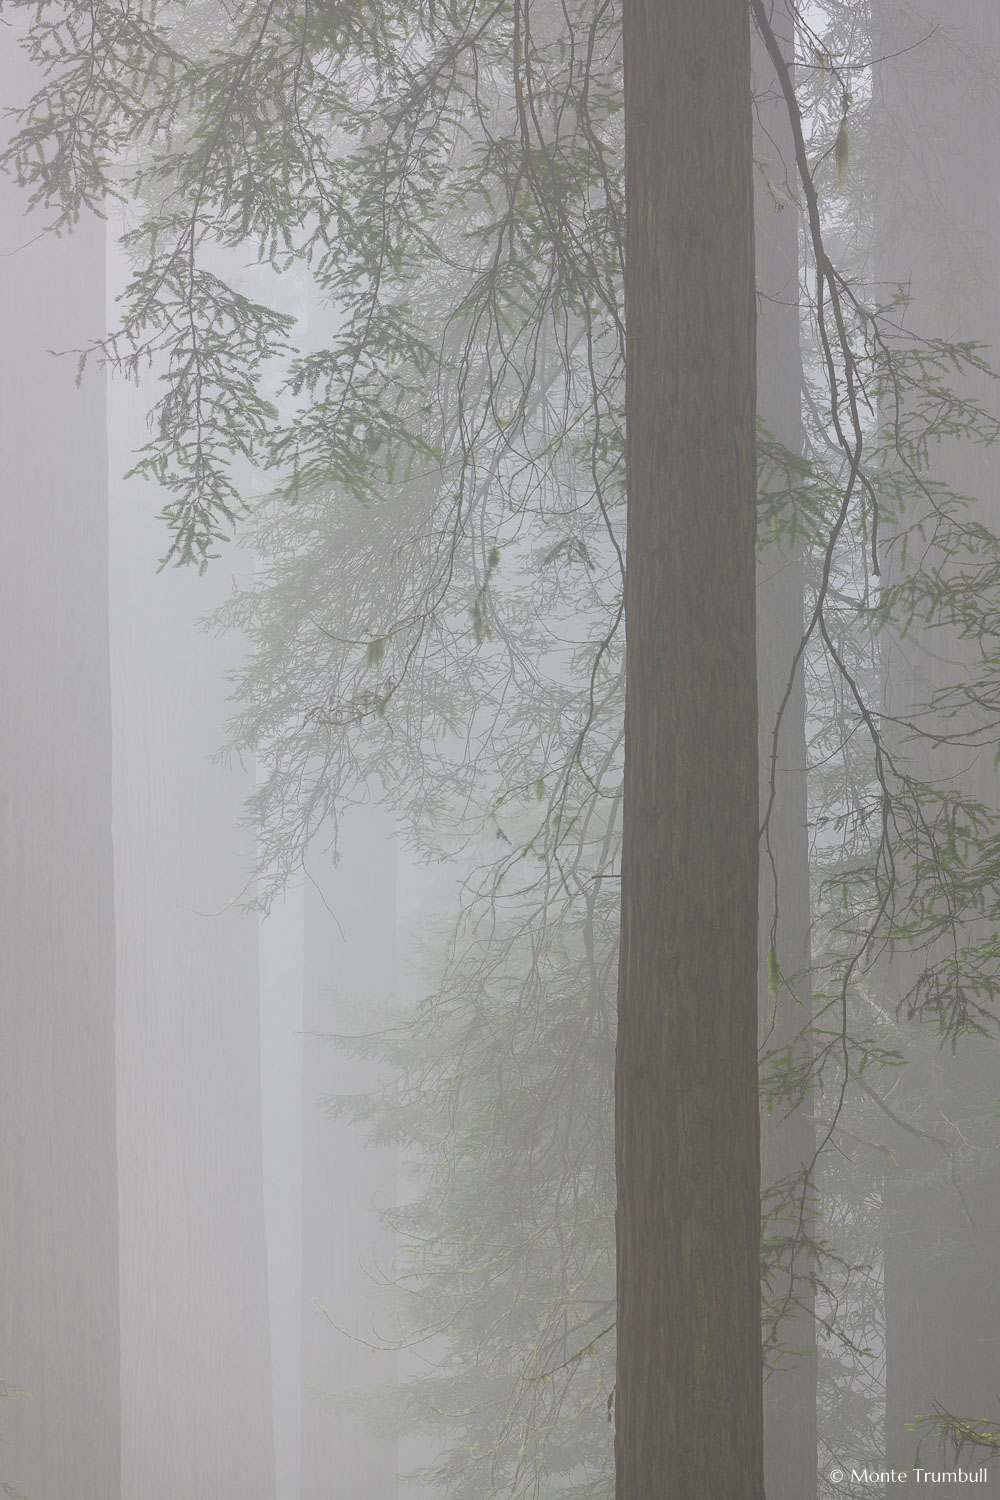 MT-20090602-170104-0128-California-Del-Norte-Rewoods-State-Park-redwoods-fog.jpg